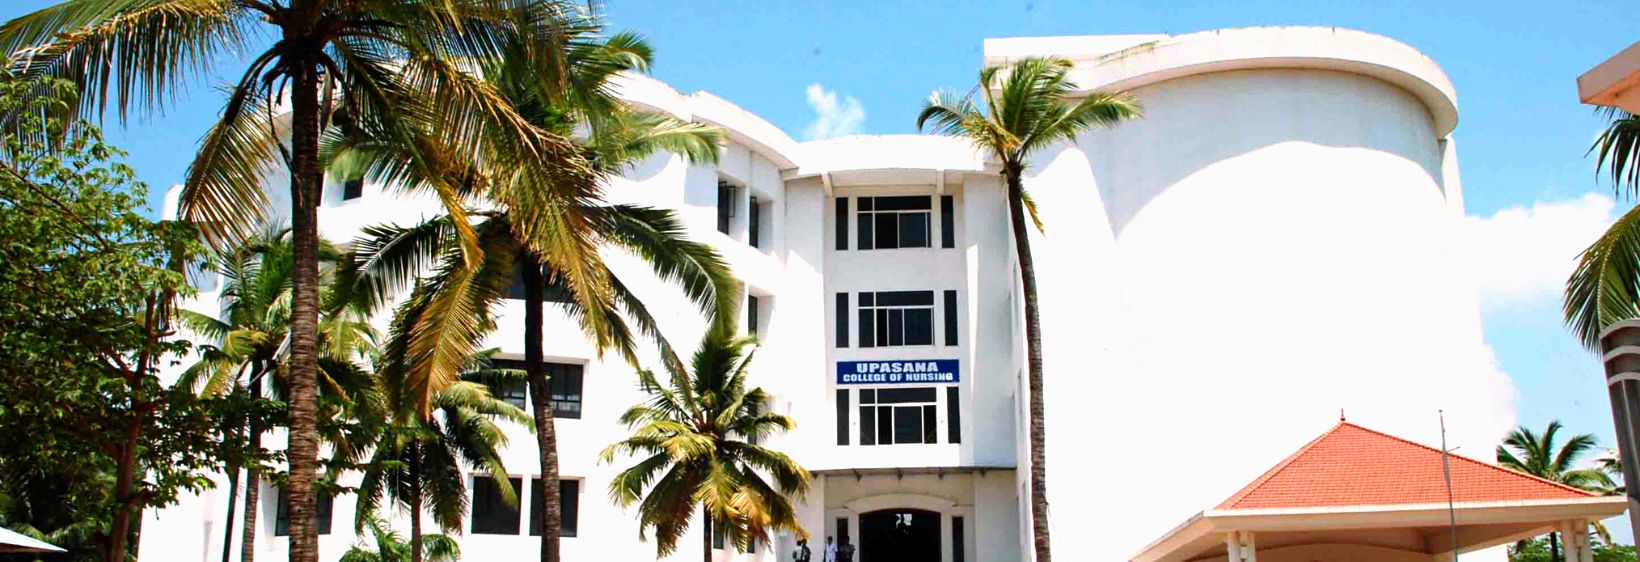 Upasana College of Nursing - Kollam